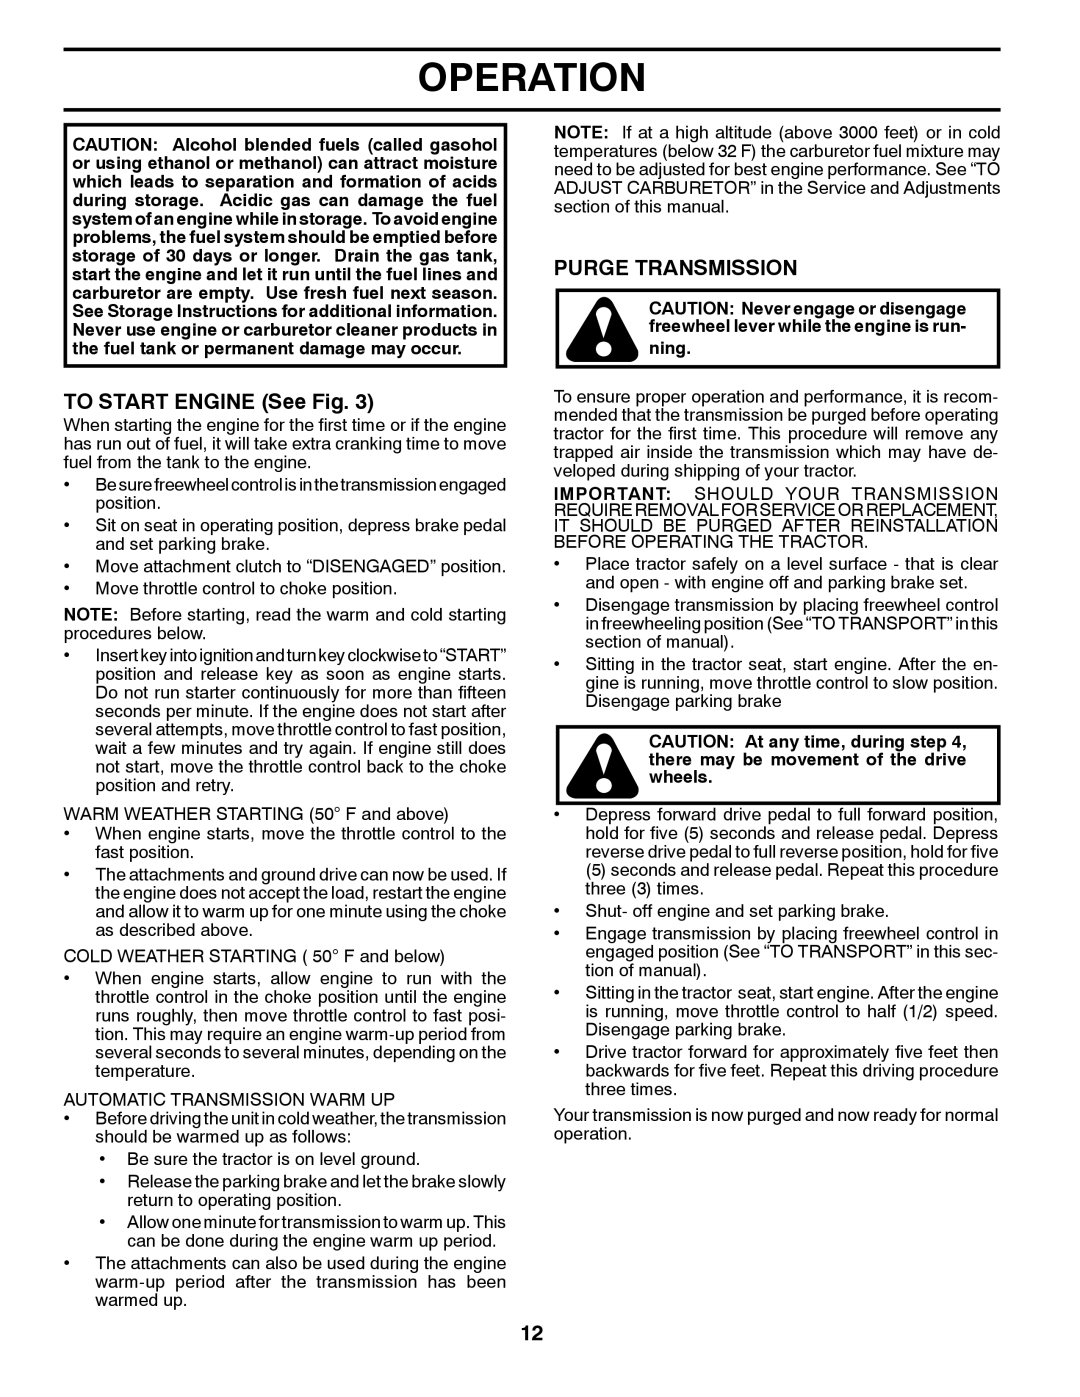 Husqvarna YTH20K46 owner manual TO START ENGINE See Fig, Purge Transmission, Operation, ning 